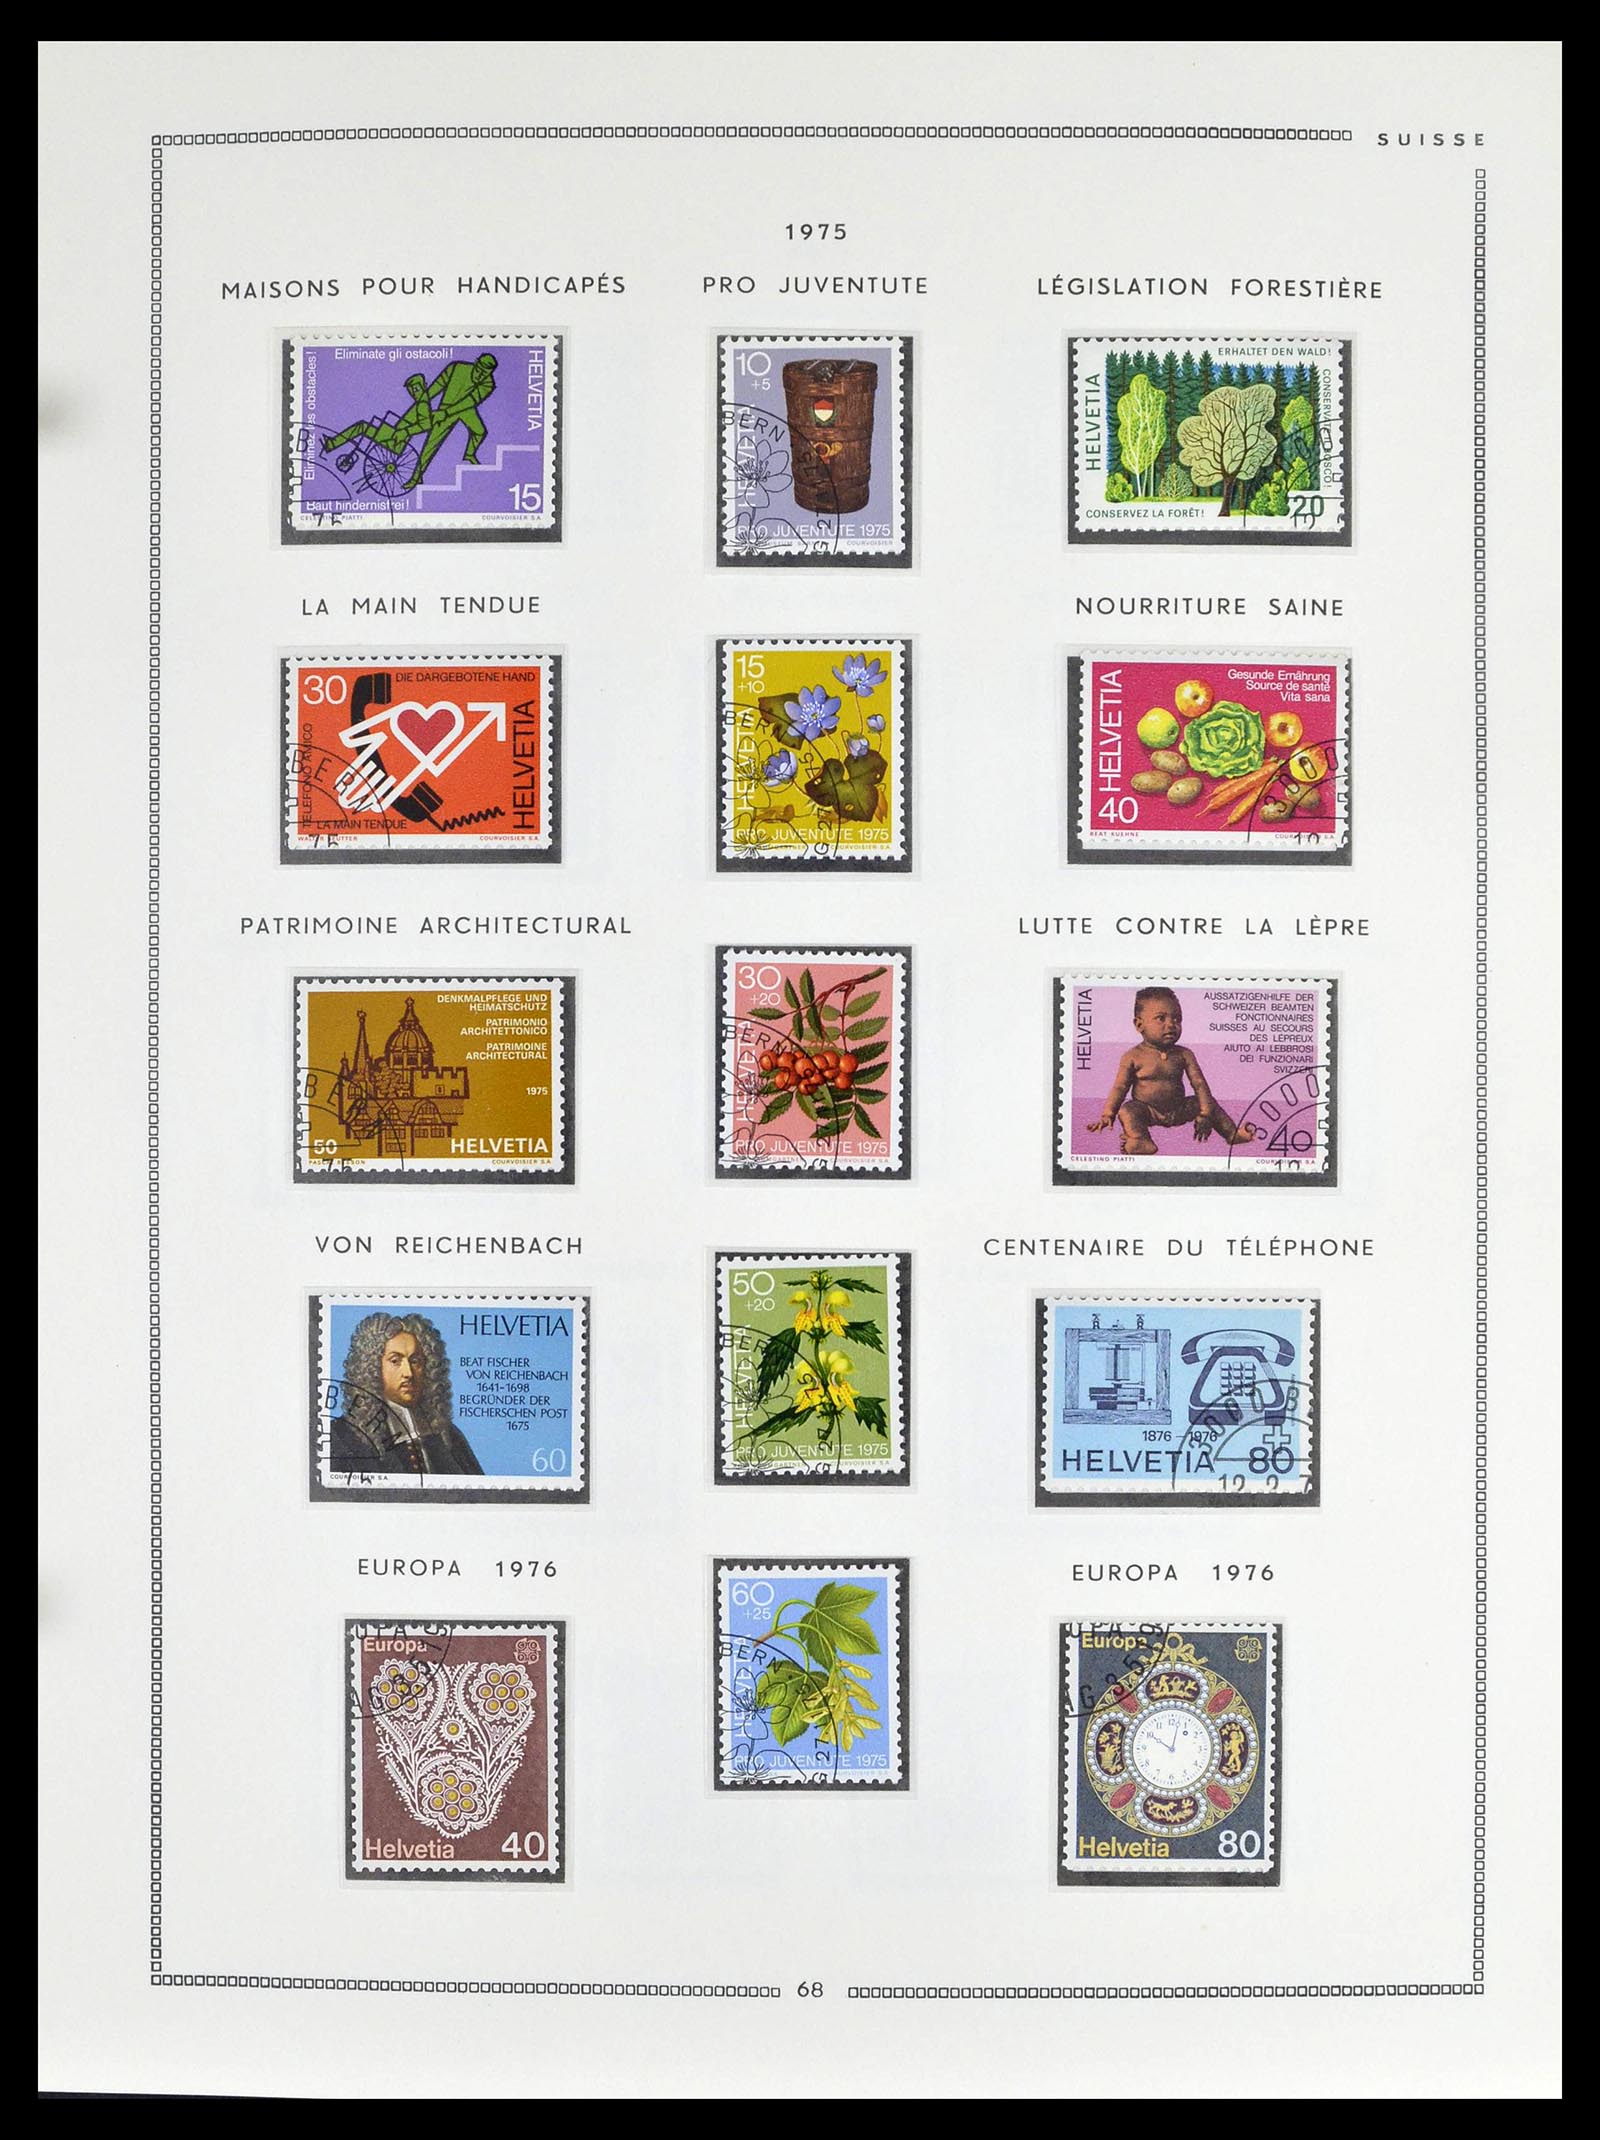 39094 0066 - Stamp collection 39094 Switzerland 1850-2005.